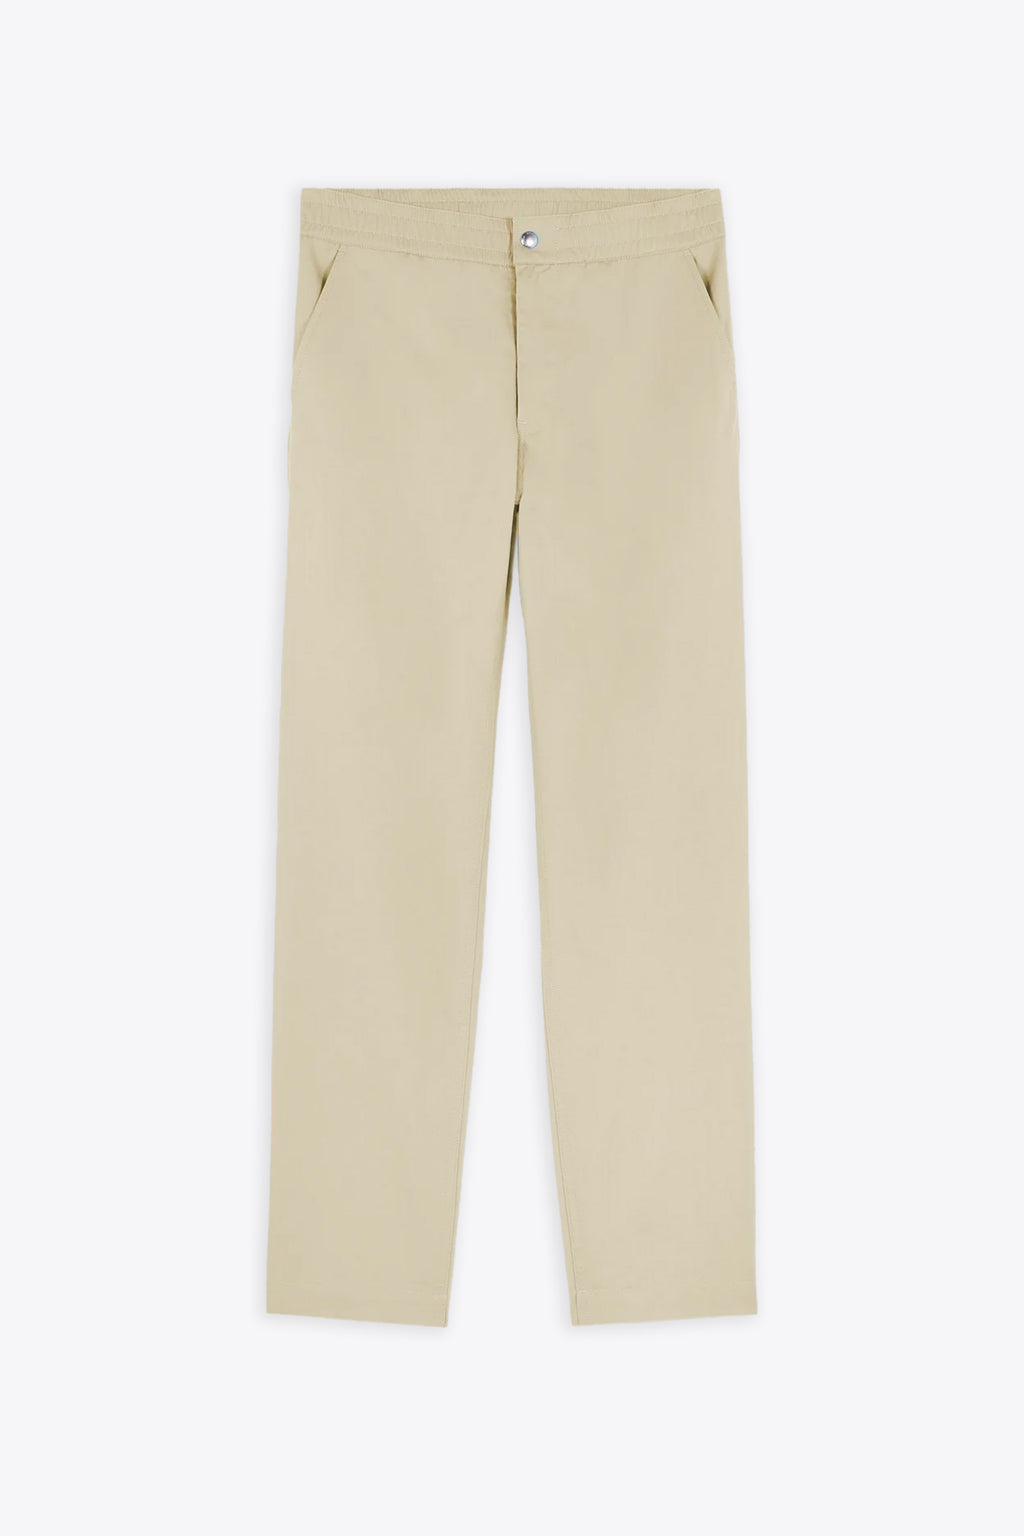 alt-image__Light-beige-cotton-pants-with-elastic-waistband---Casual-Pants